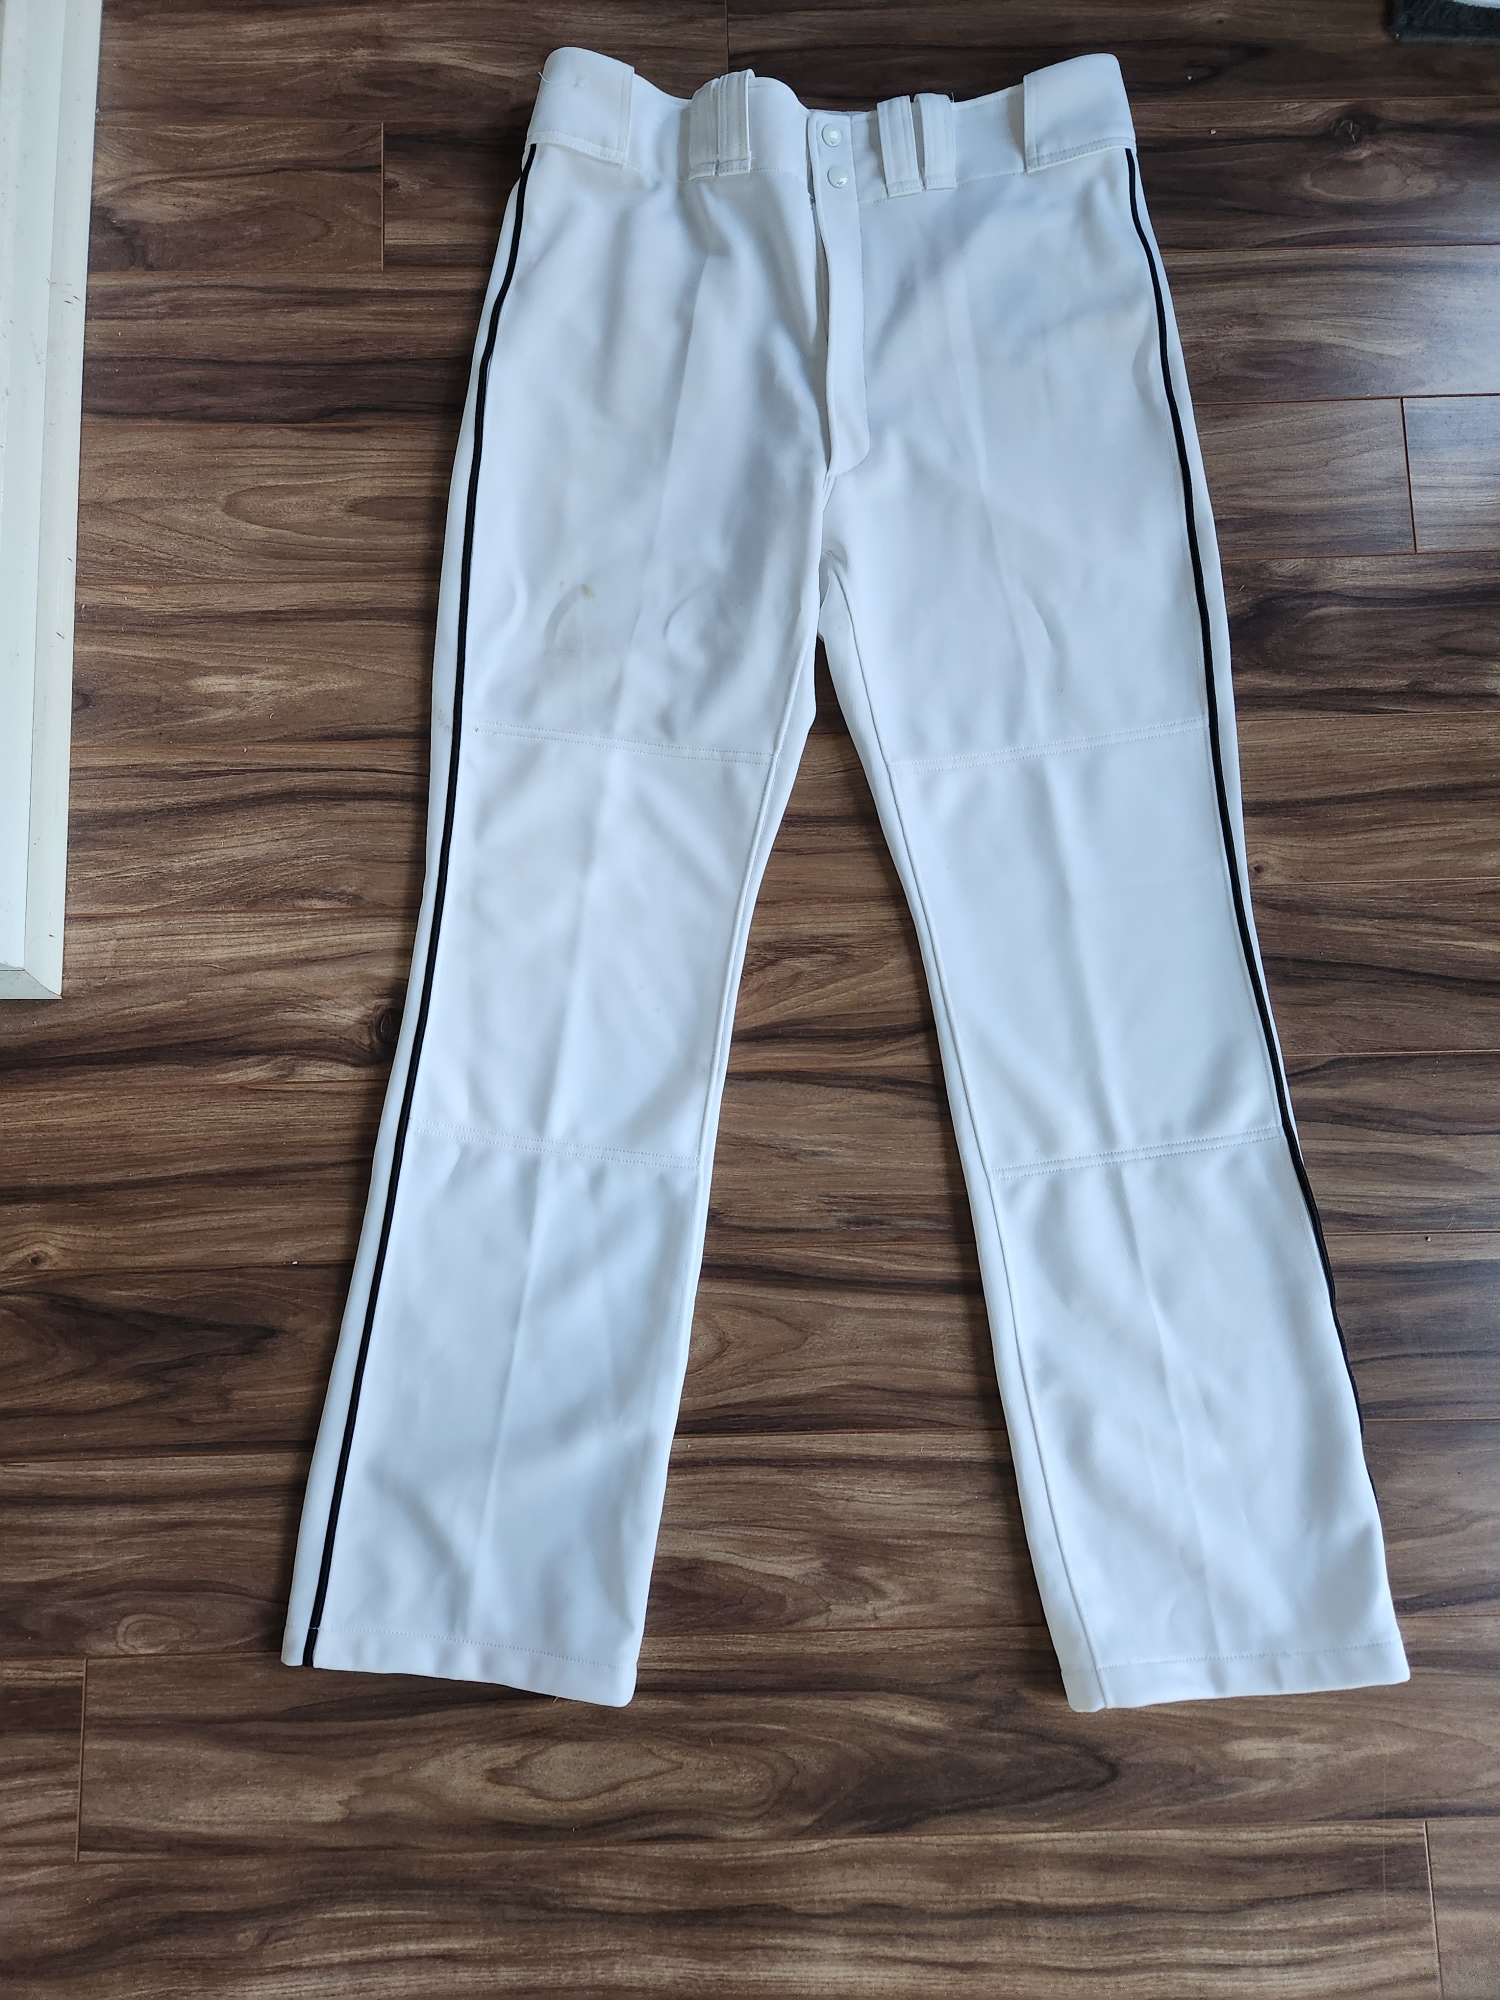 White Adult Men's Used XL Mizuno Game Pants